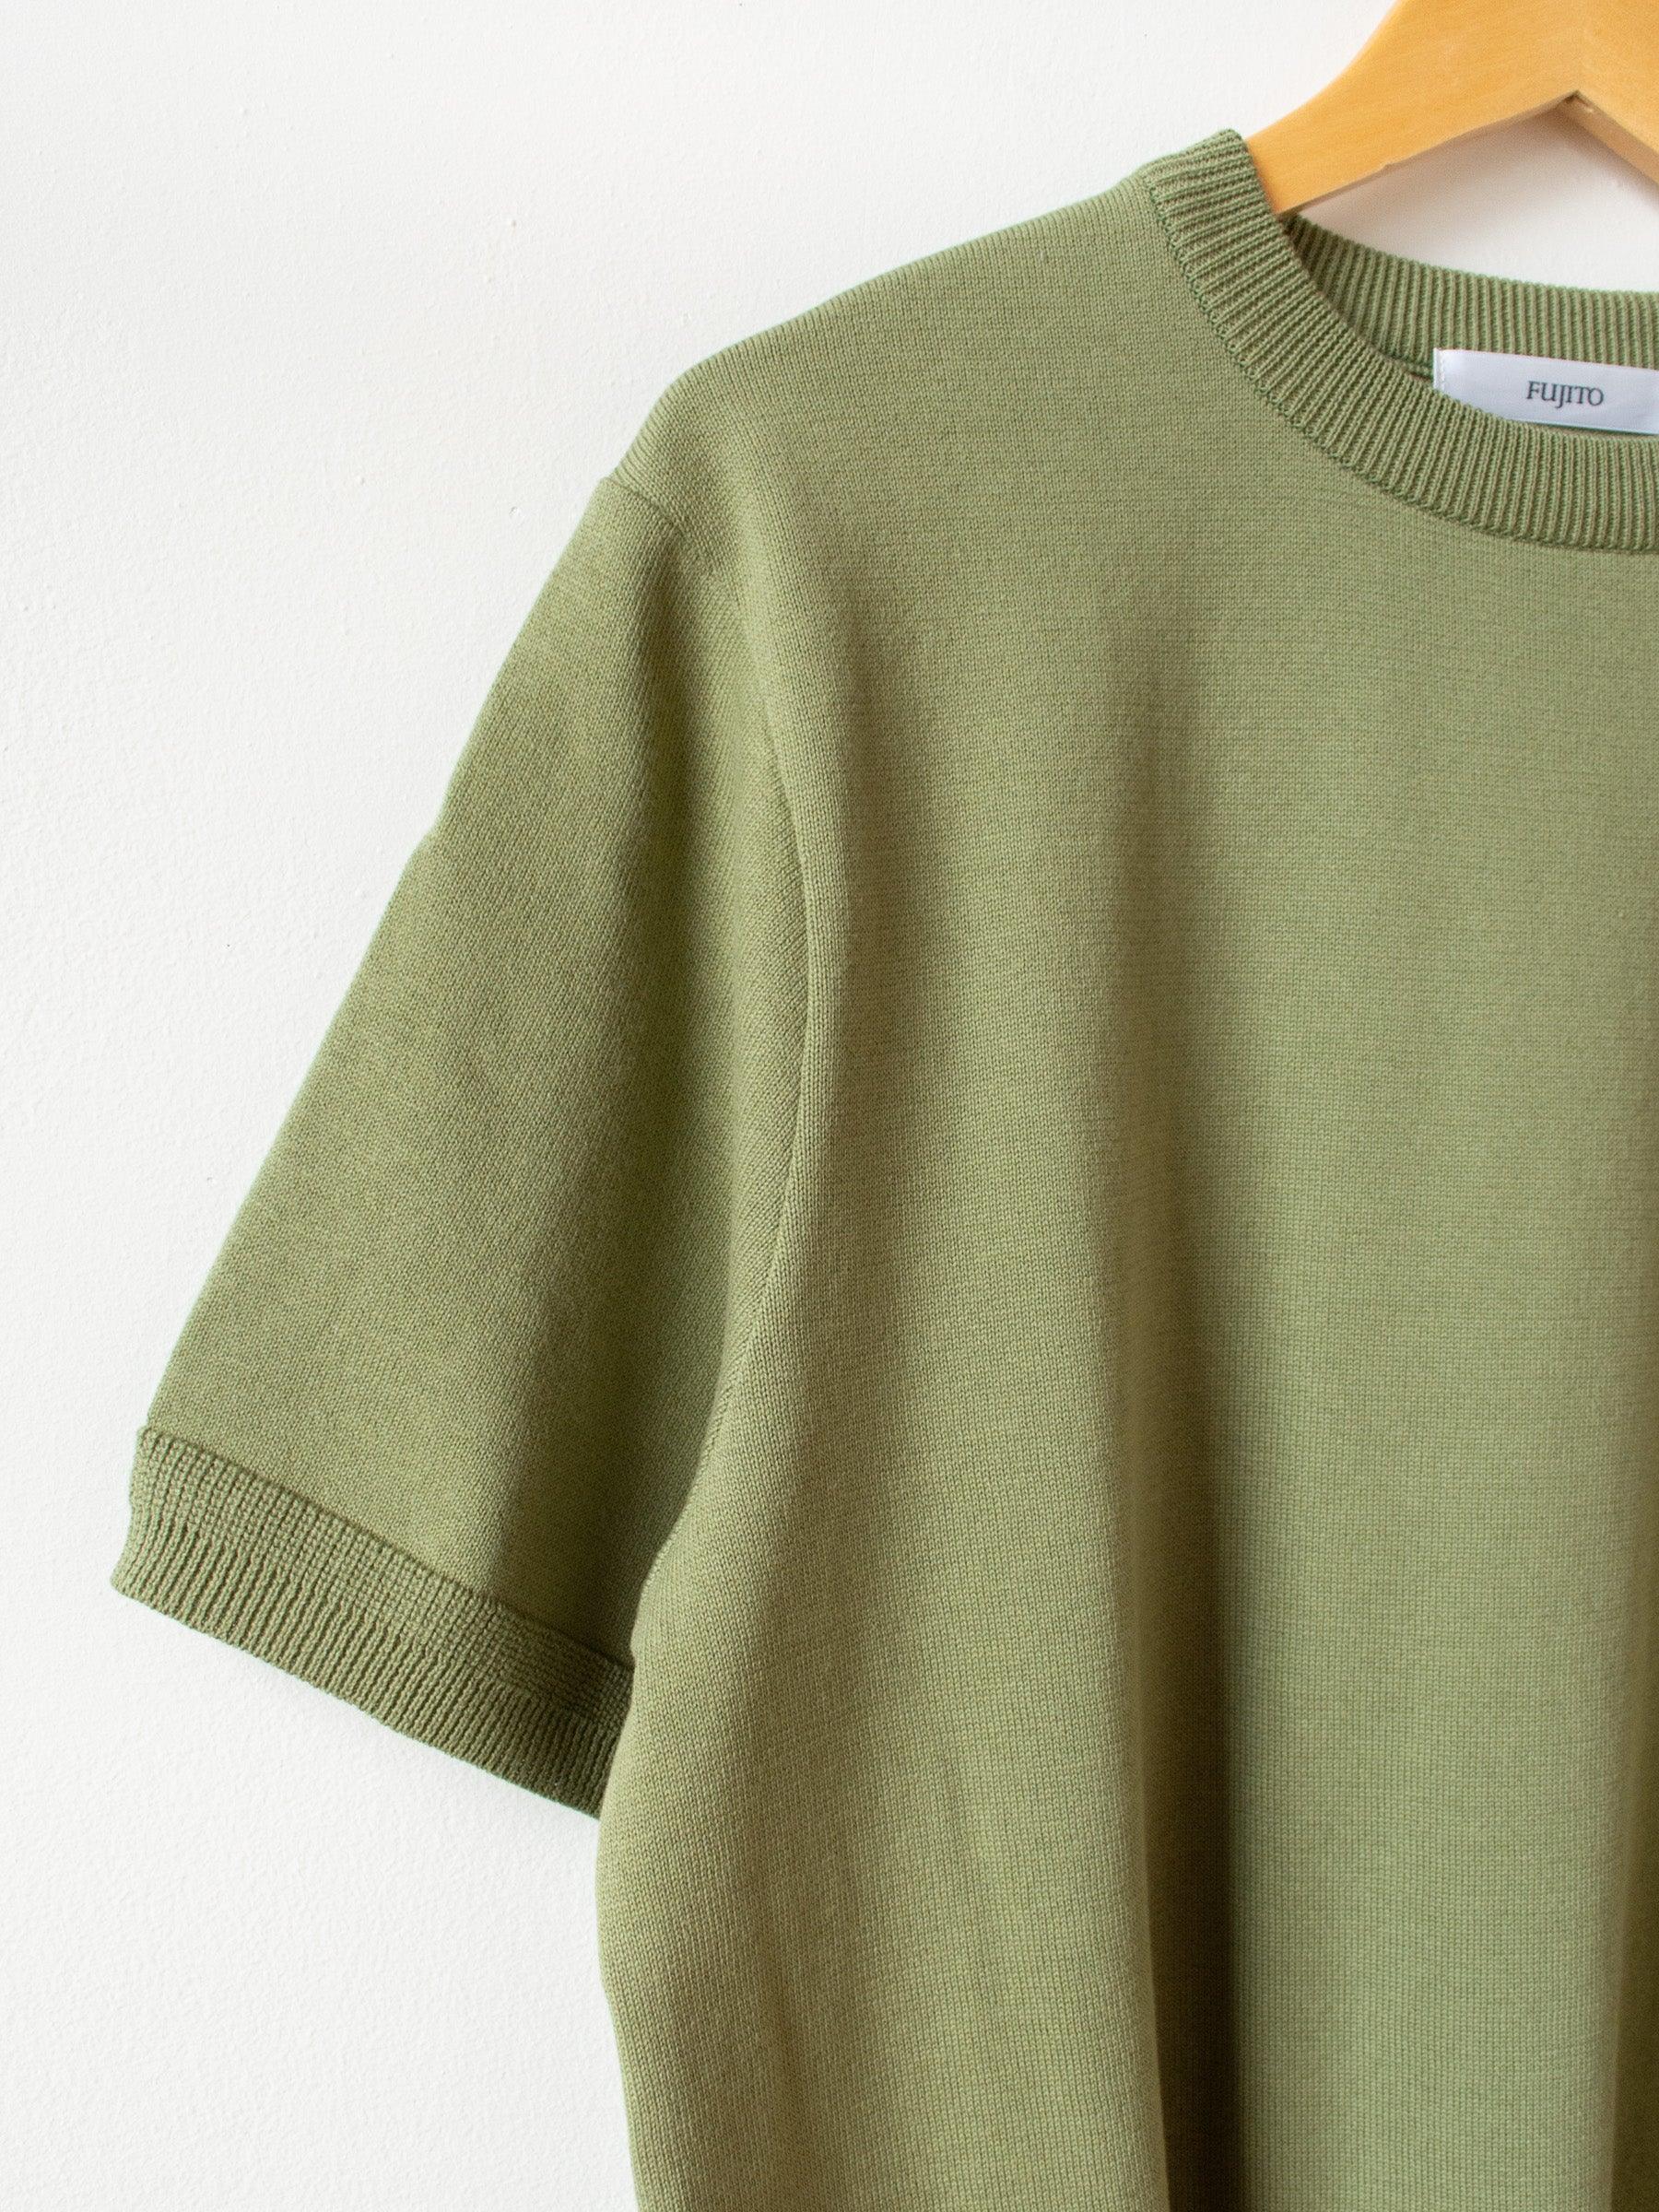 Namu Shop - Fujito Knit T-Shirt - Evergreen